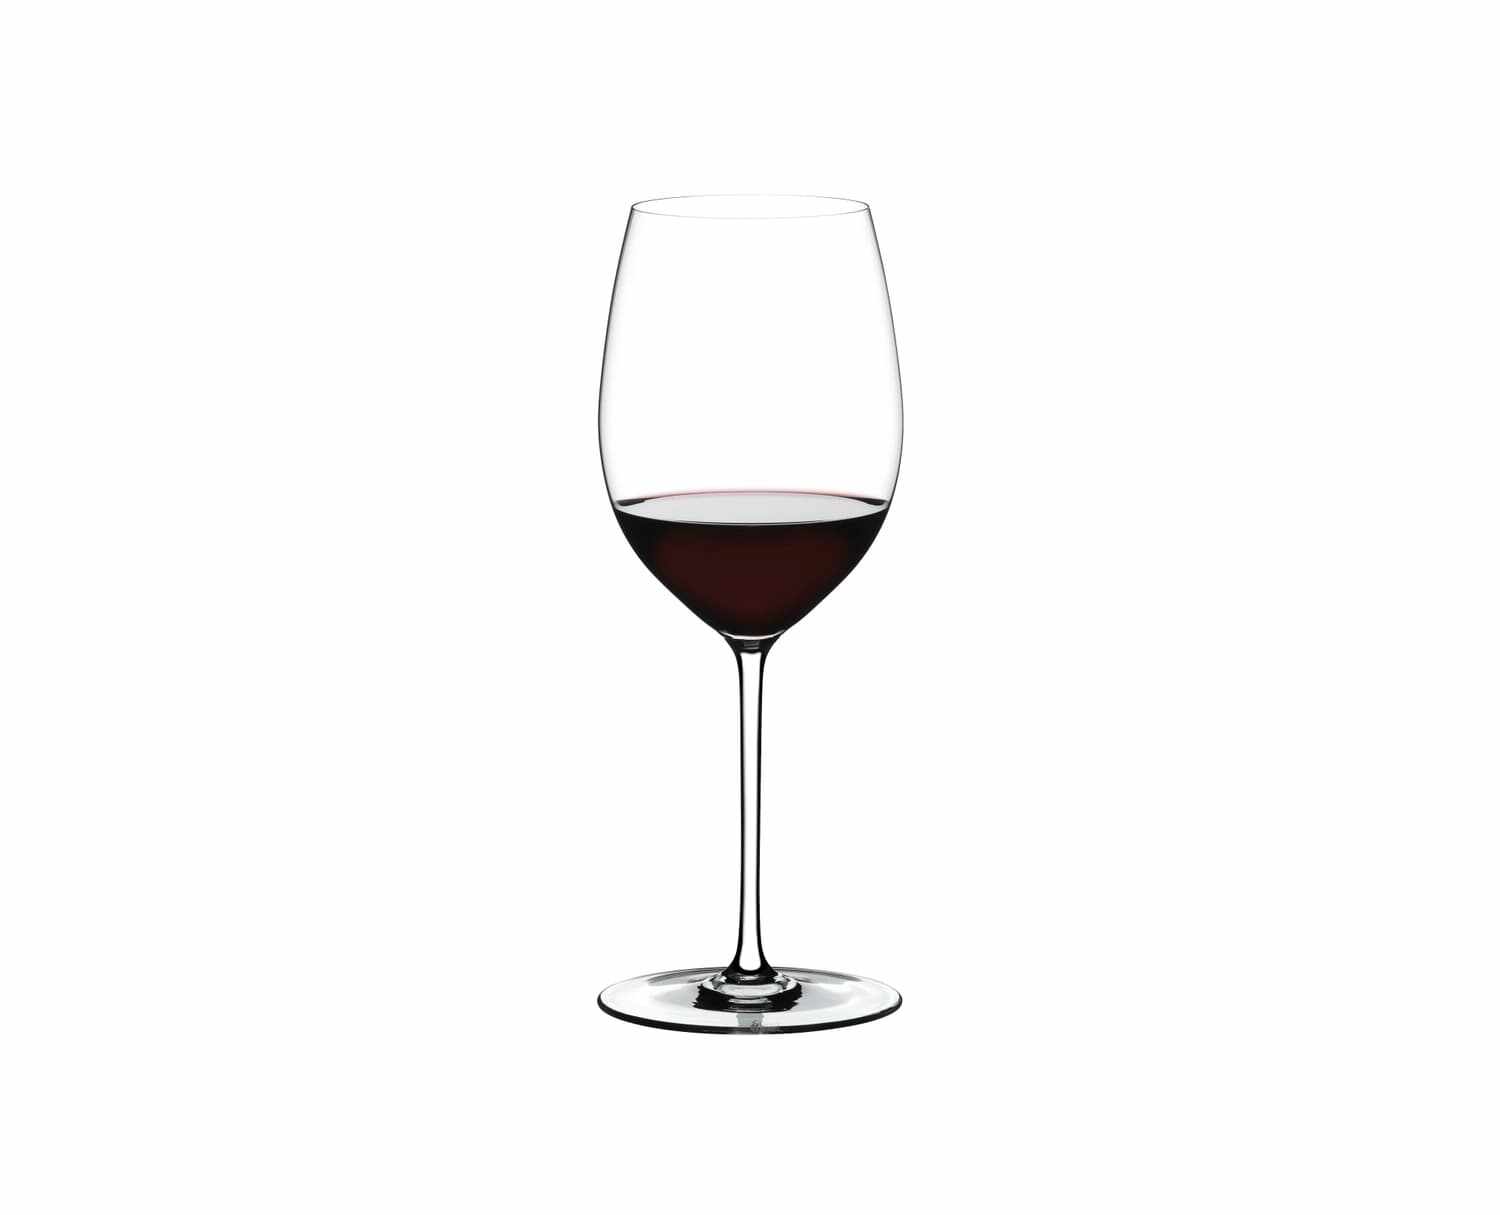 Pahar pentru vin, din cristal Fatto A Mano Cabernet / Merlot Alb, 625 ml, Riedel